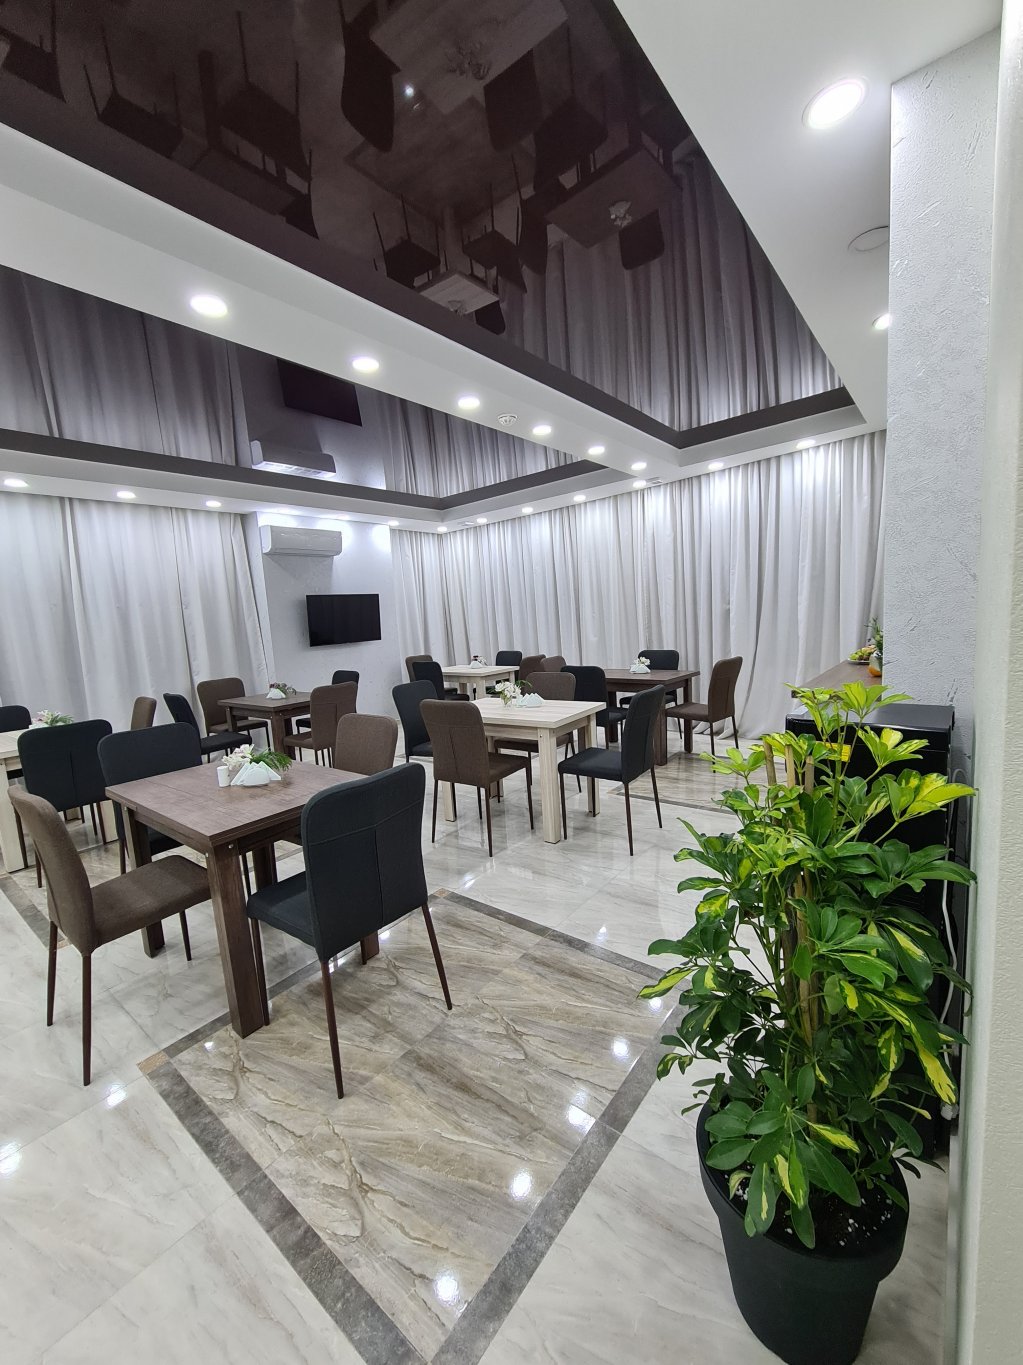 Апартаменты с кухней в отеле "Comfort Time 17" #1707 id-1011 - аренда апартаментов в Батуми